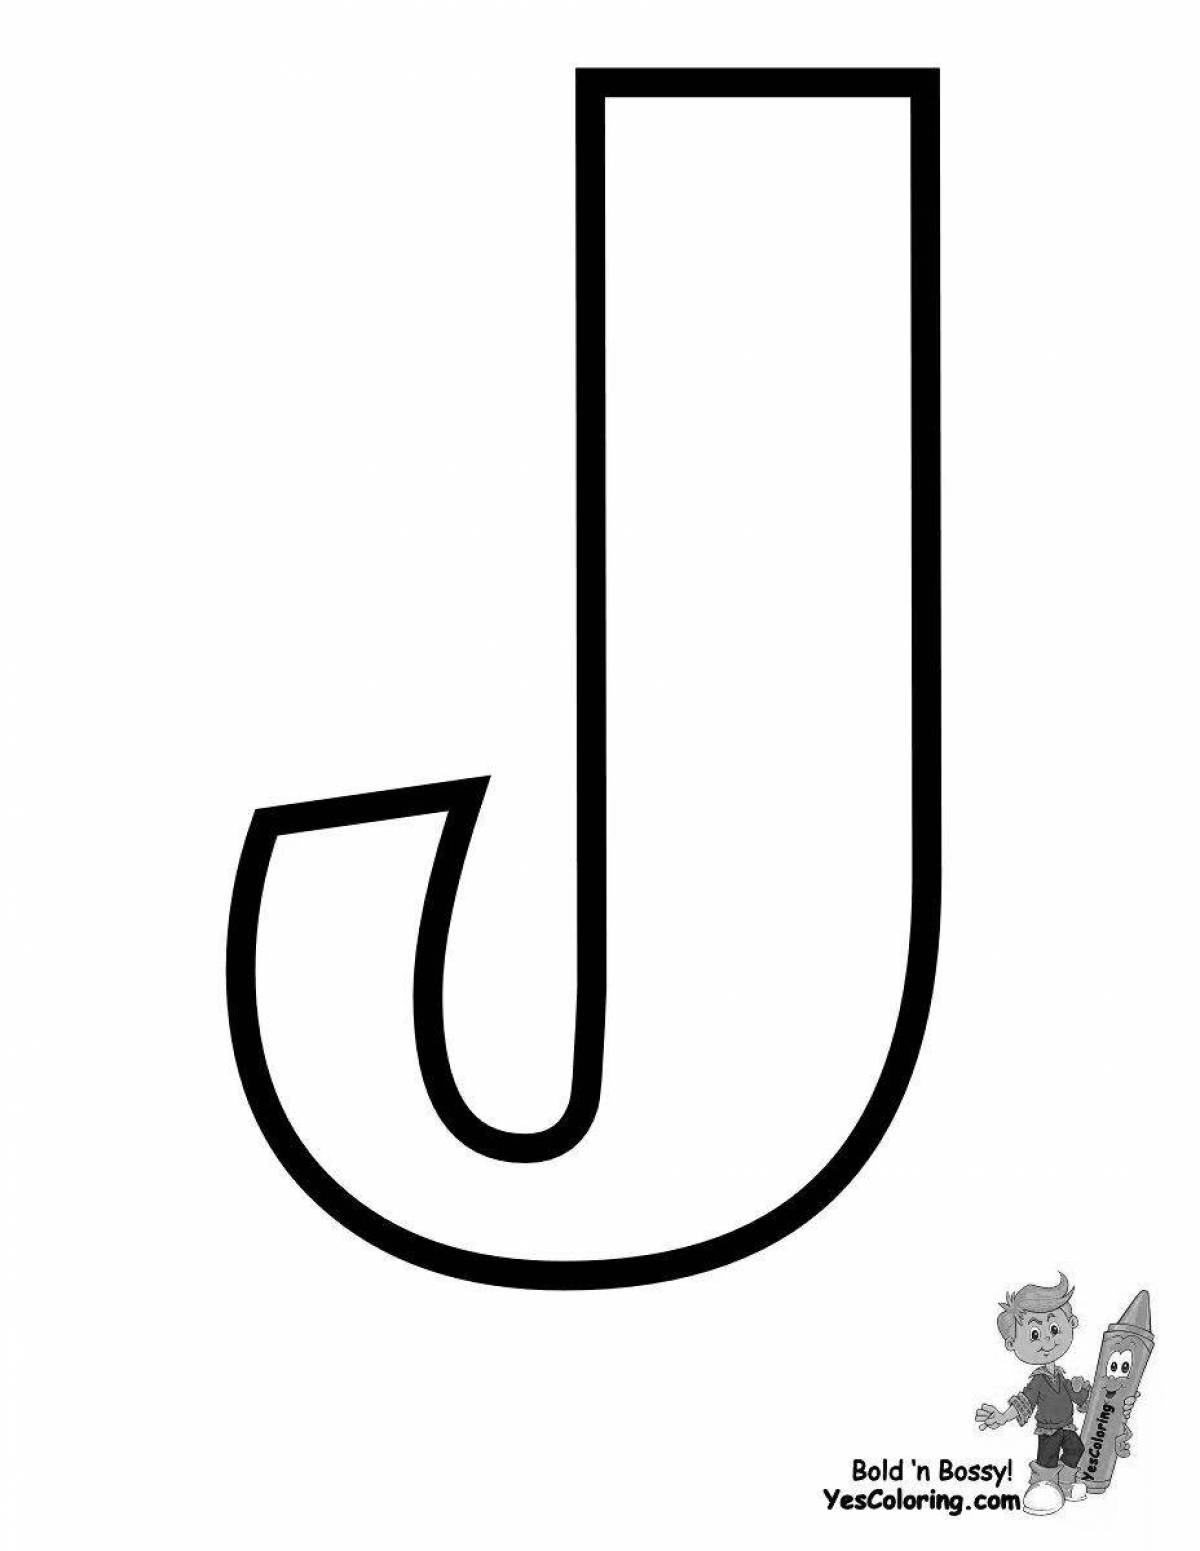 Раскраска жирная буква j